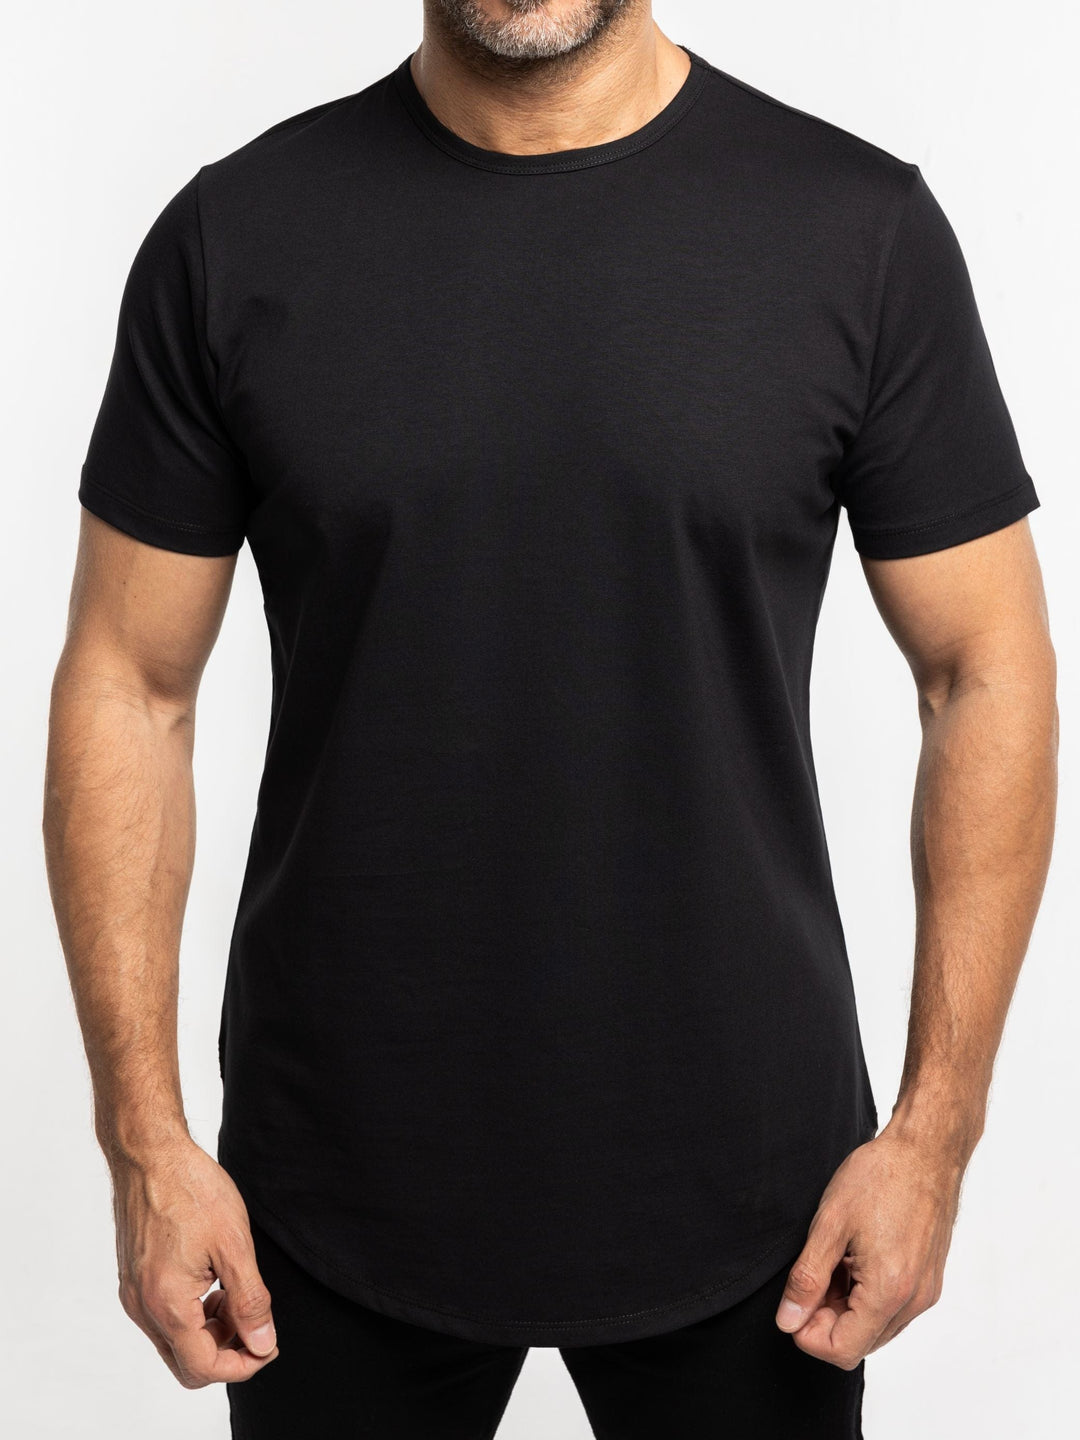 Zhivago x Nuuk Men T-shirt Black Curved Hem T-Shirt: SLS Comfort